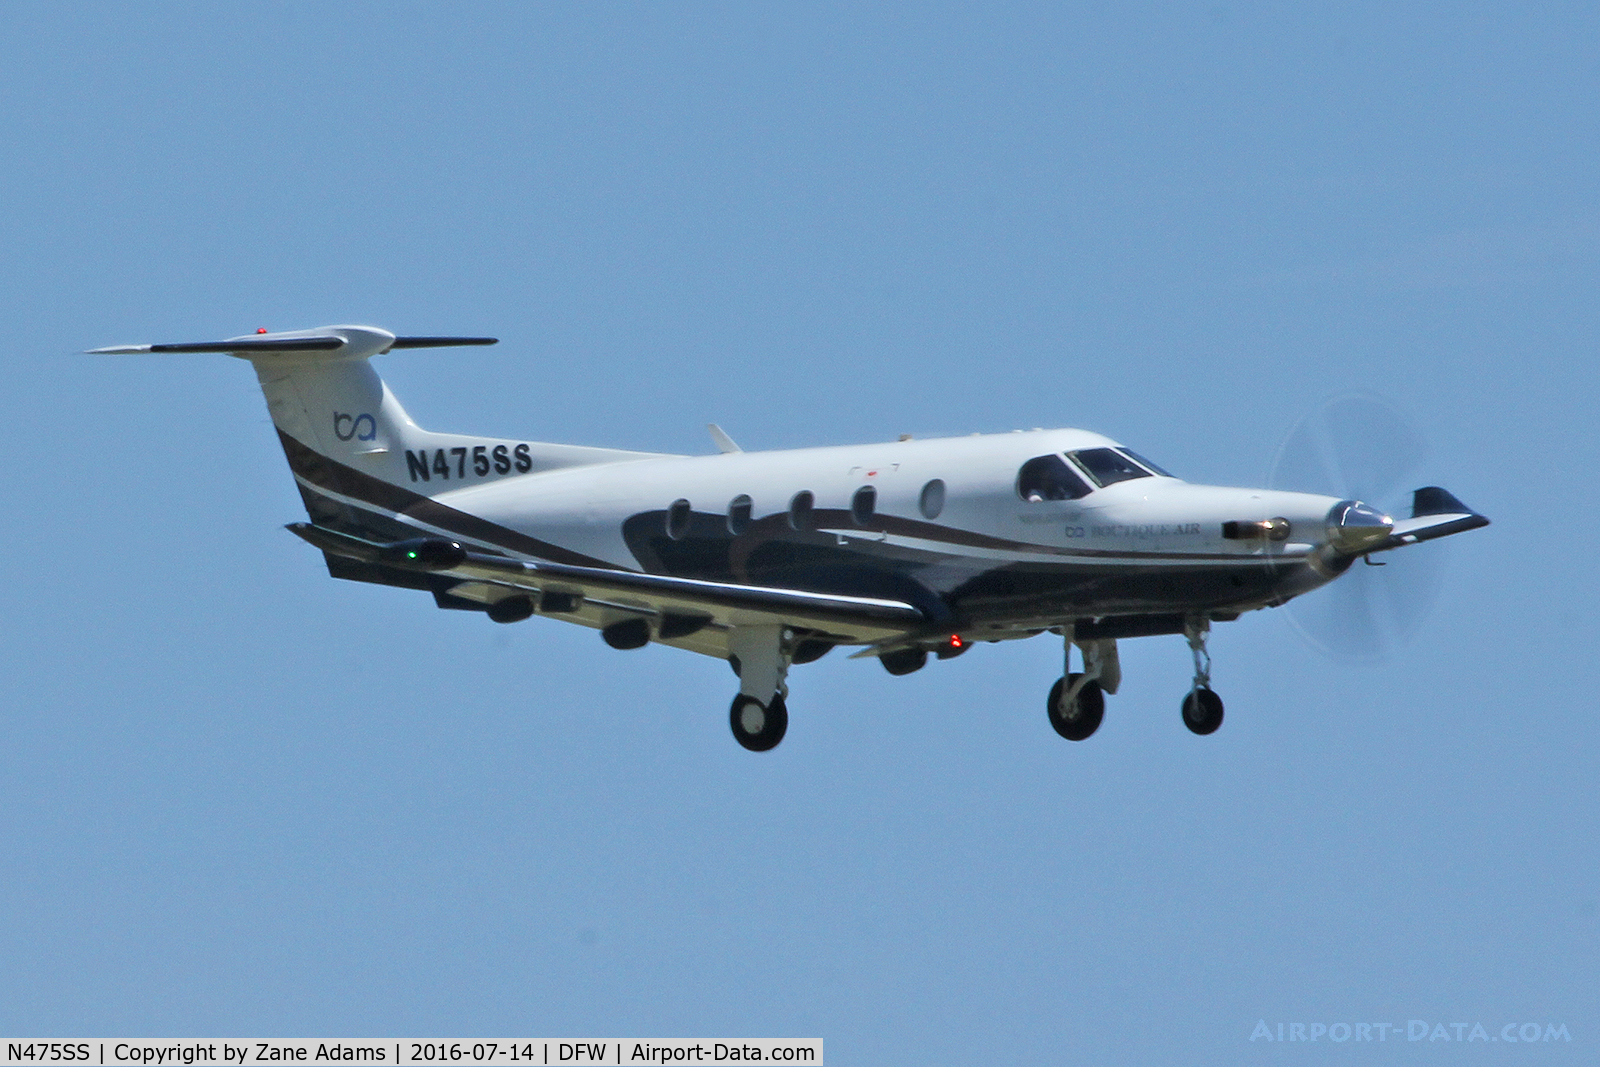 N475SS, 2007 Pilatus PC-12/47 C/N 866, Arriving at DFW Airport